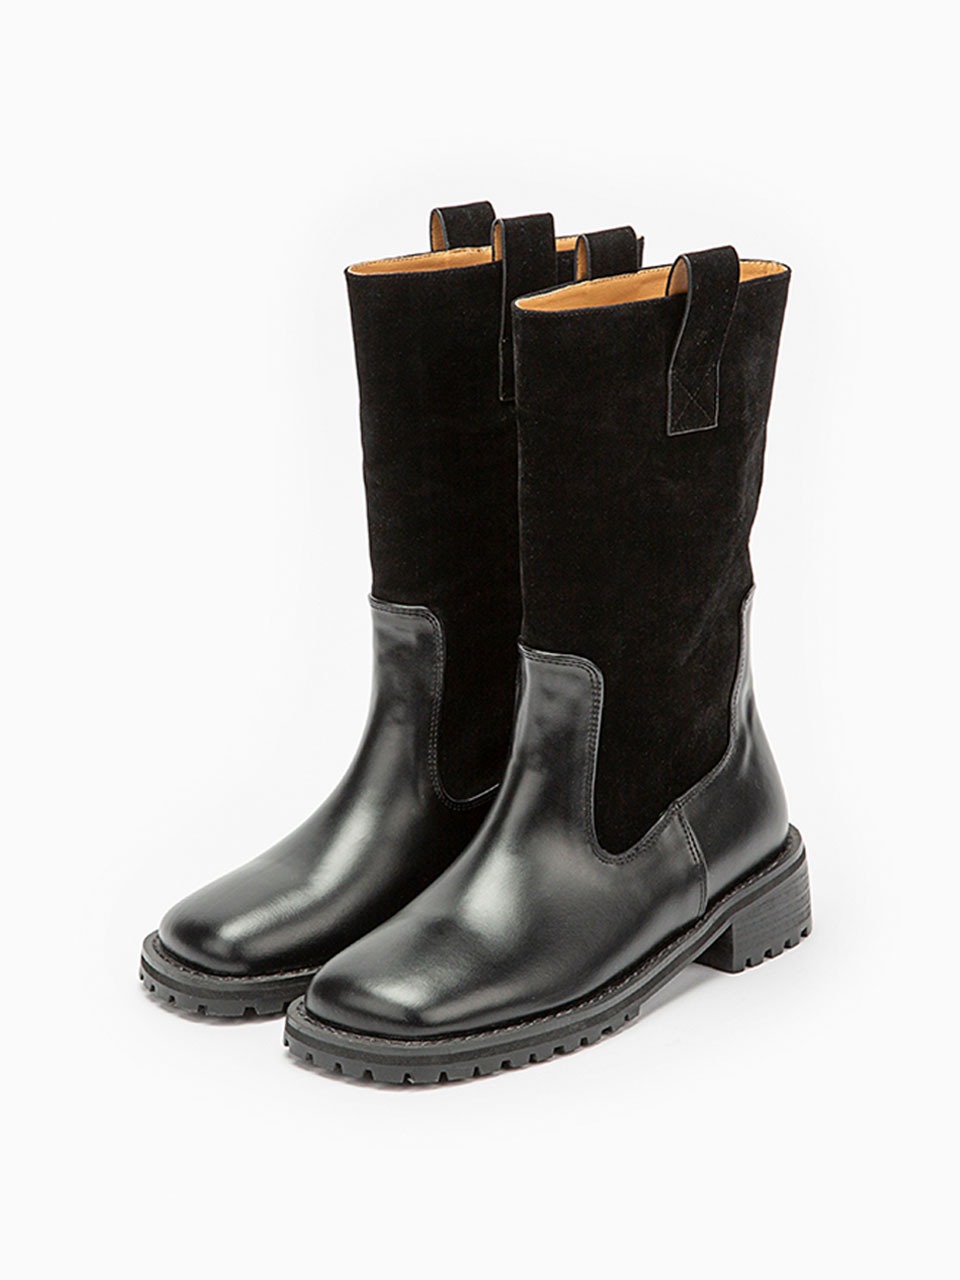 Middle Walker Boots (Velvet Black)